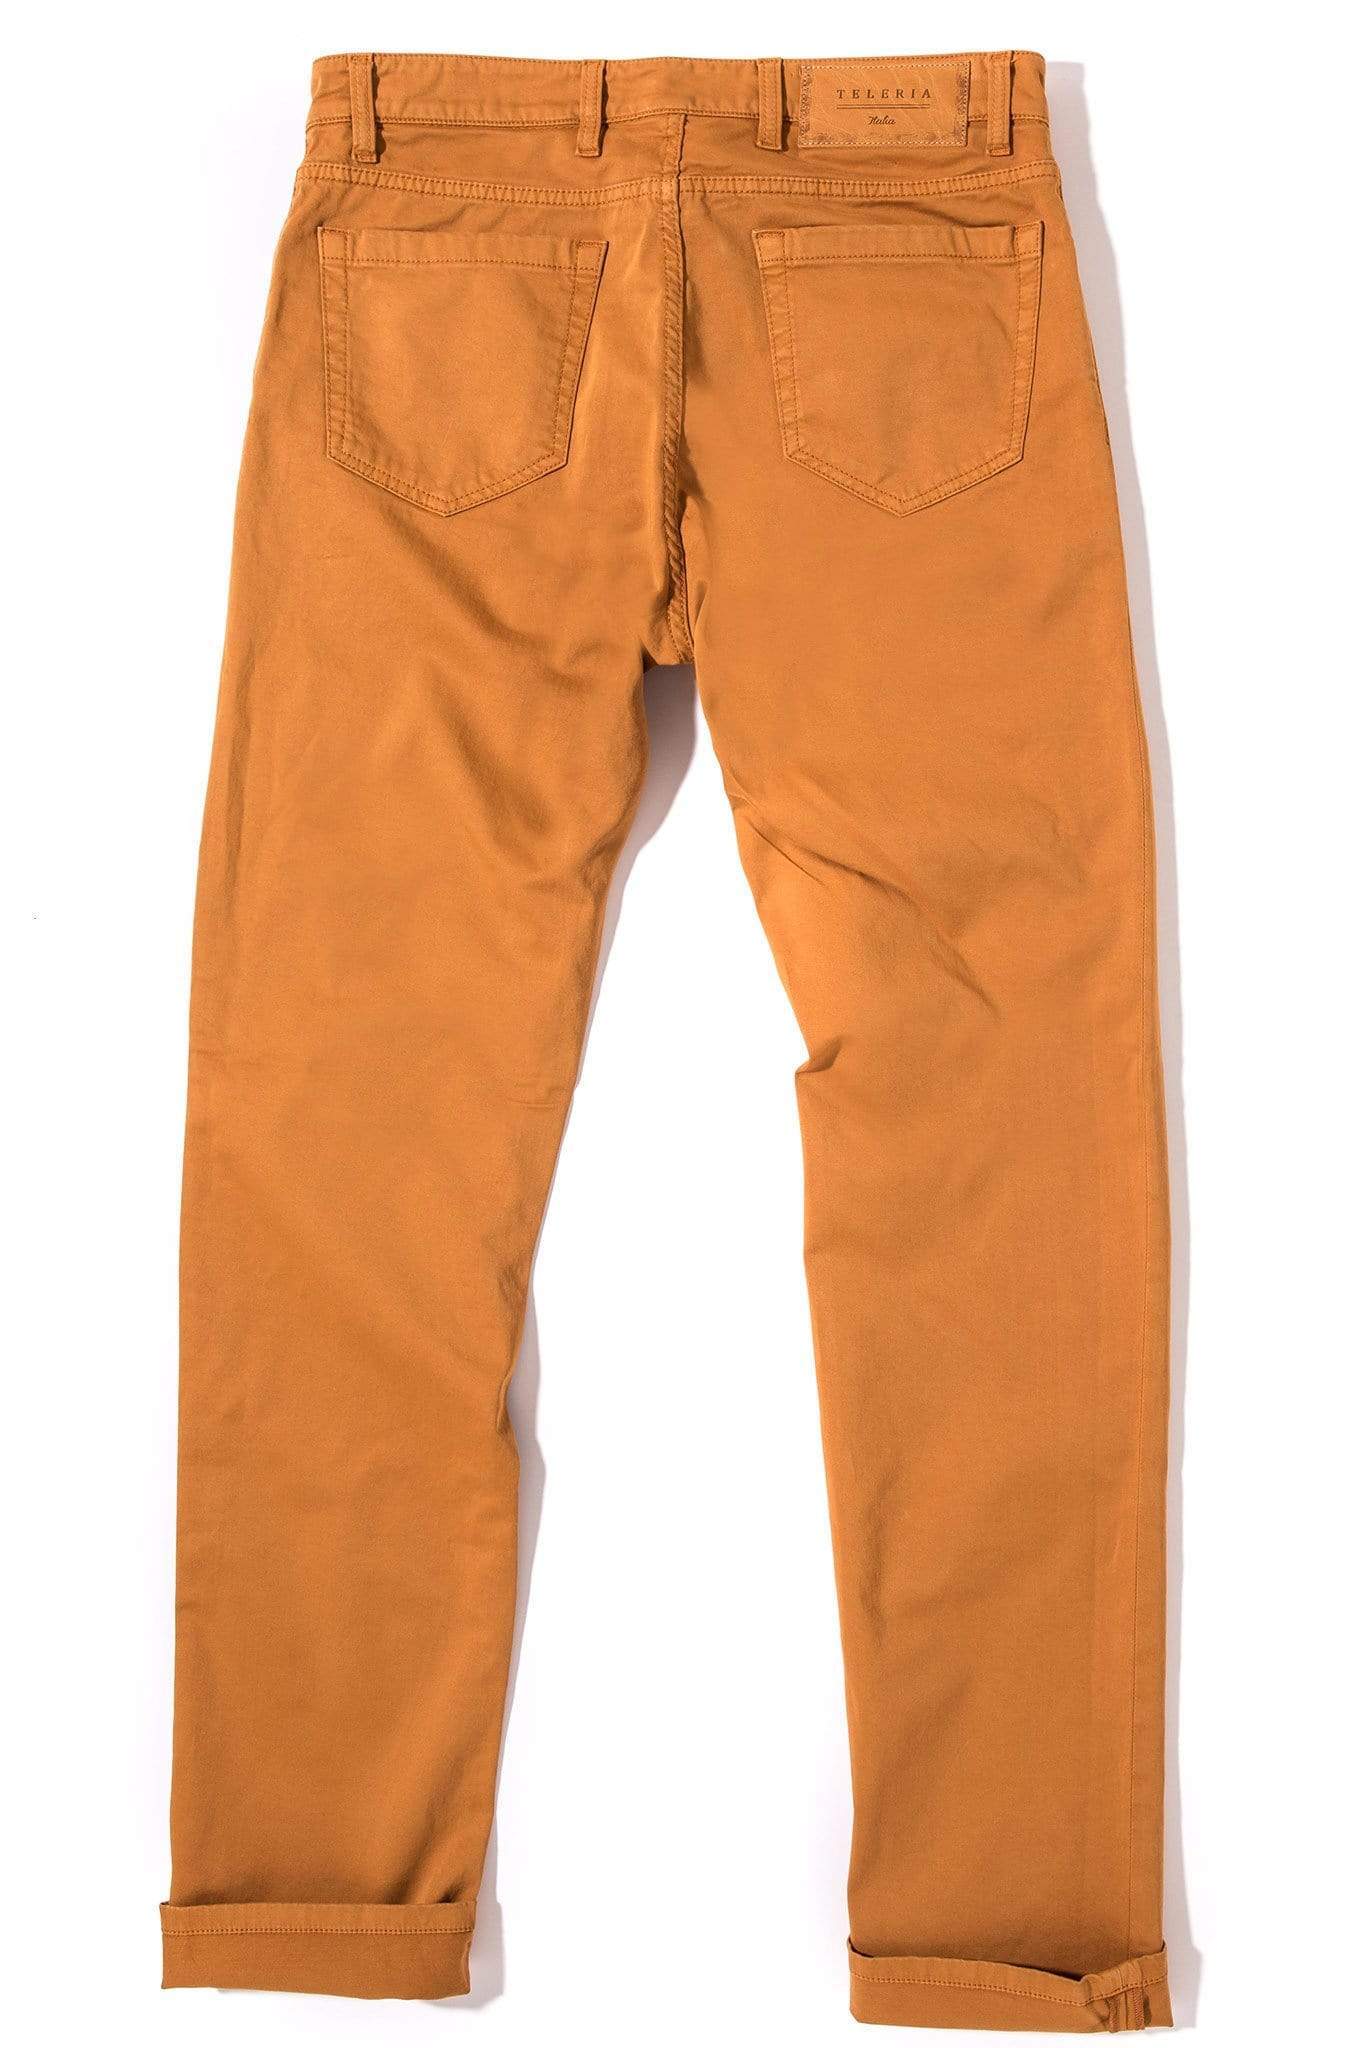 Yuma Soft Touch In Papaya | Mens - Pants - 5 Pocket | Teleria Zed